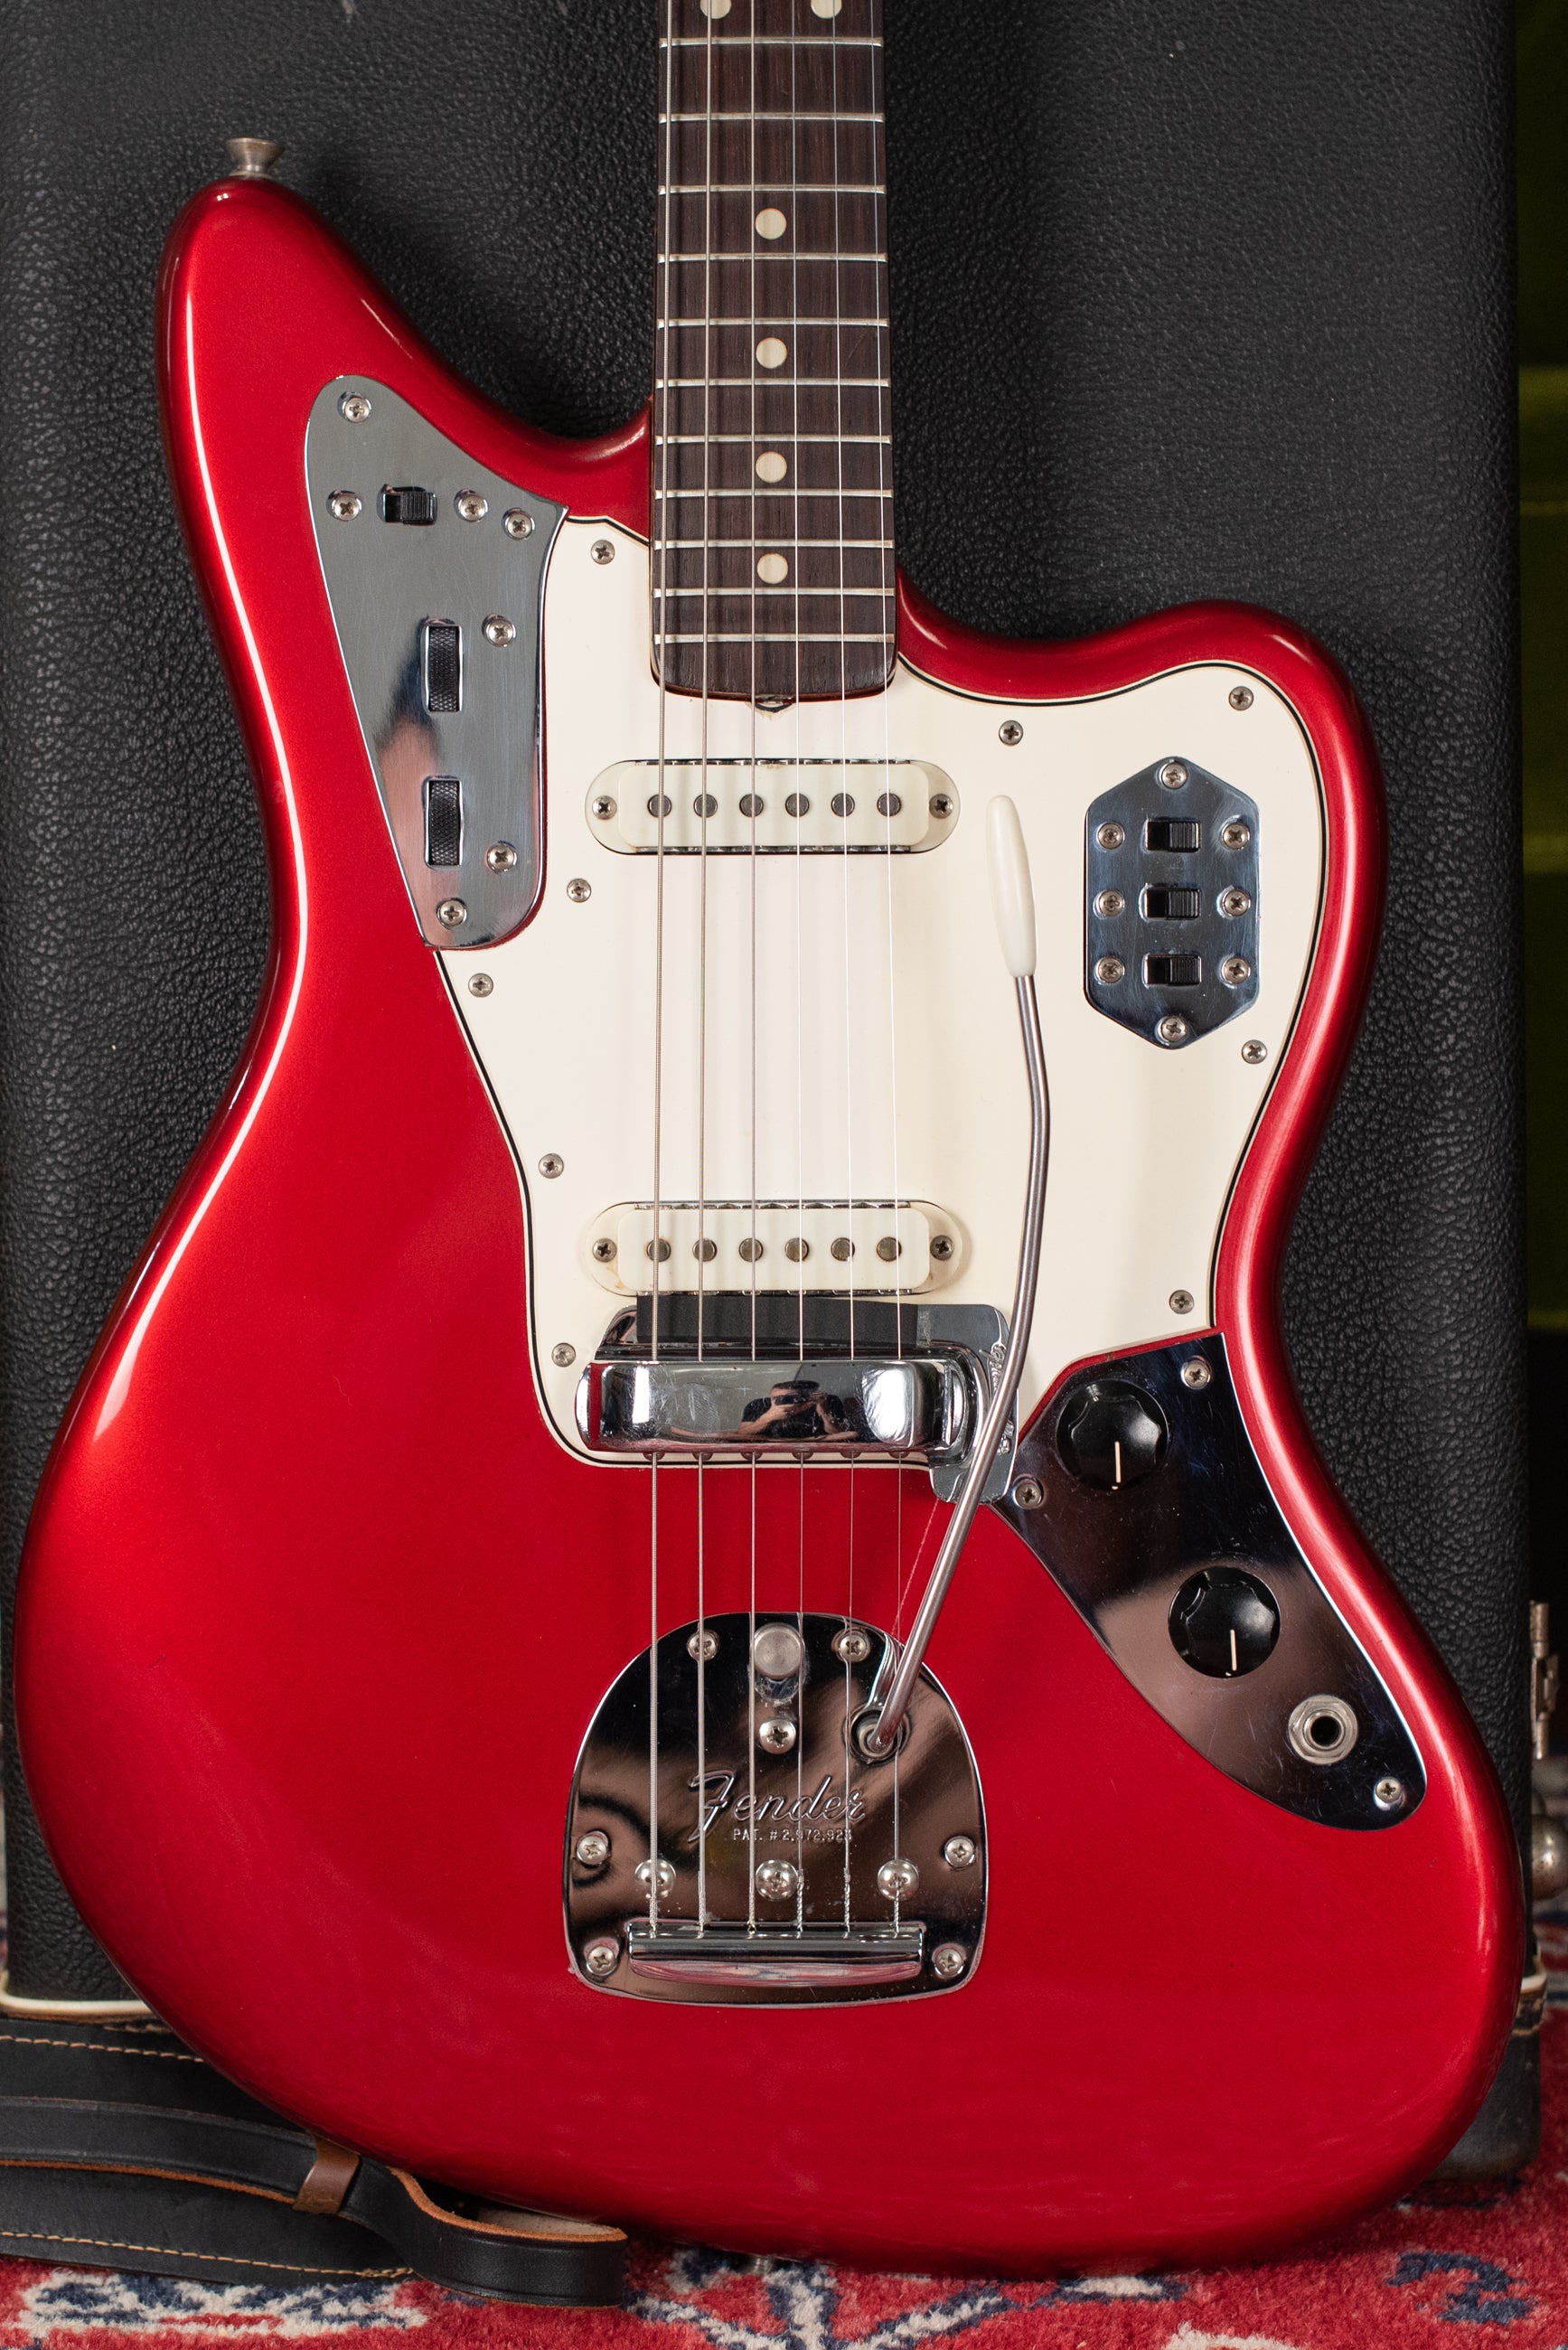 1965 Fender Jaguar Candy Apple Red Metallic guitar